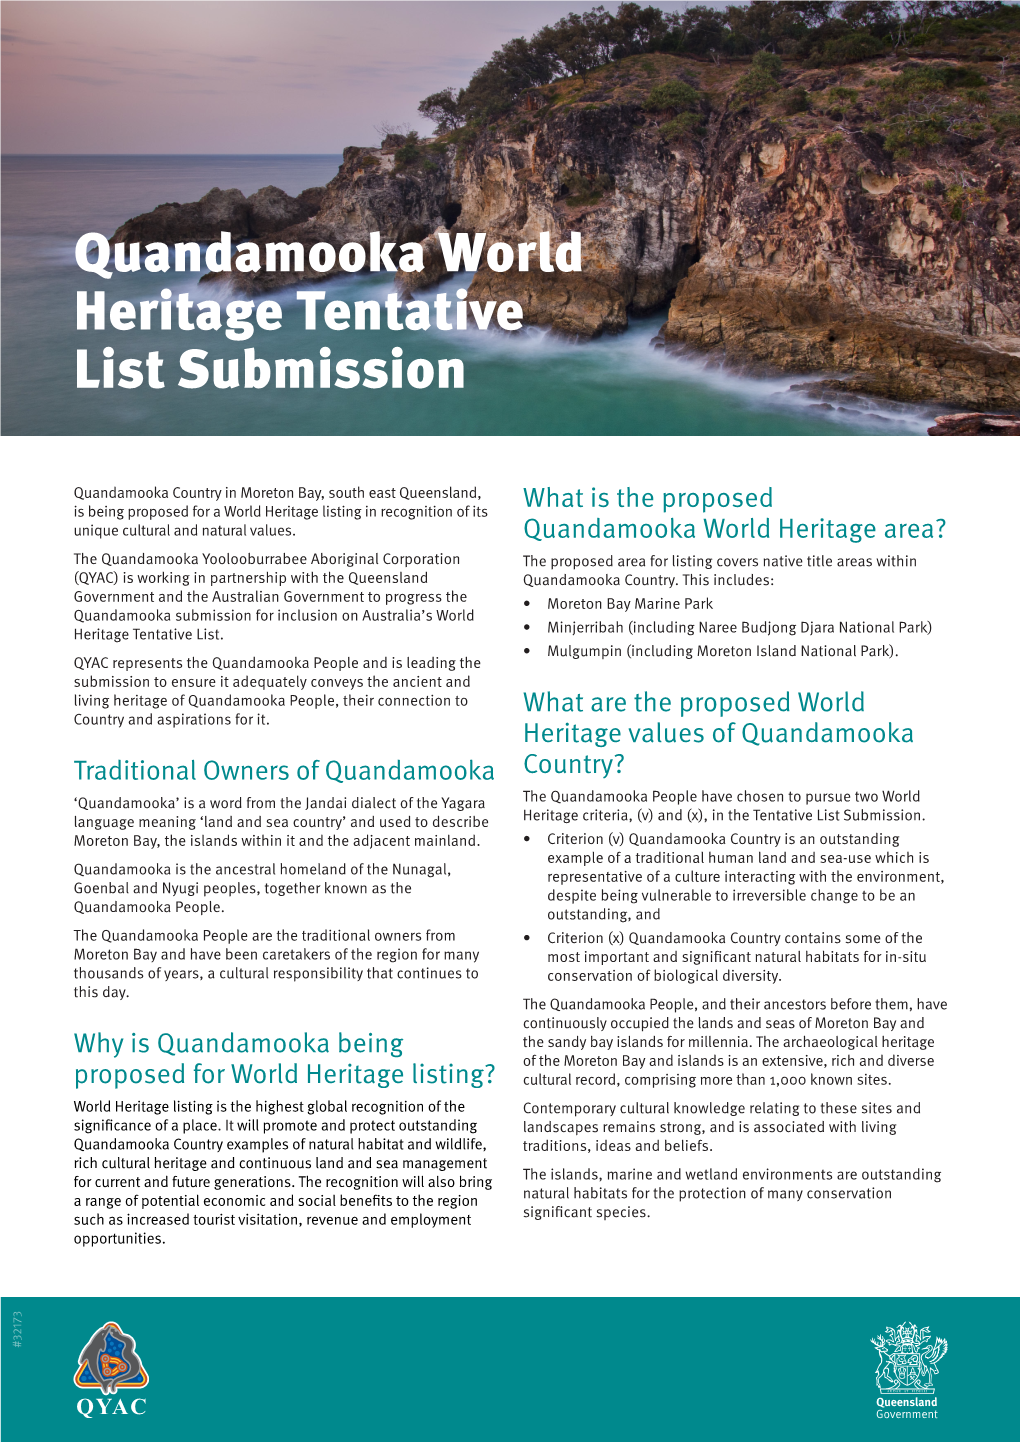 Quandamooka World Heritage Tentative List Submission Fact Sheet